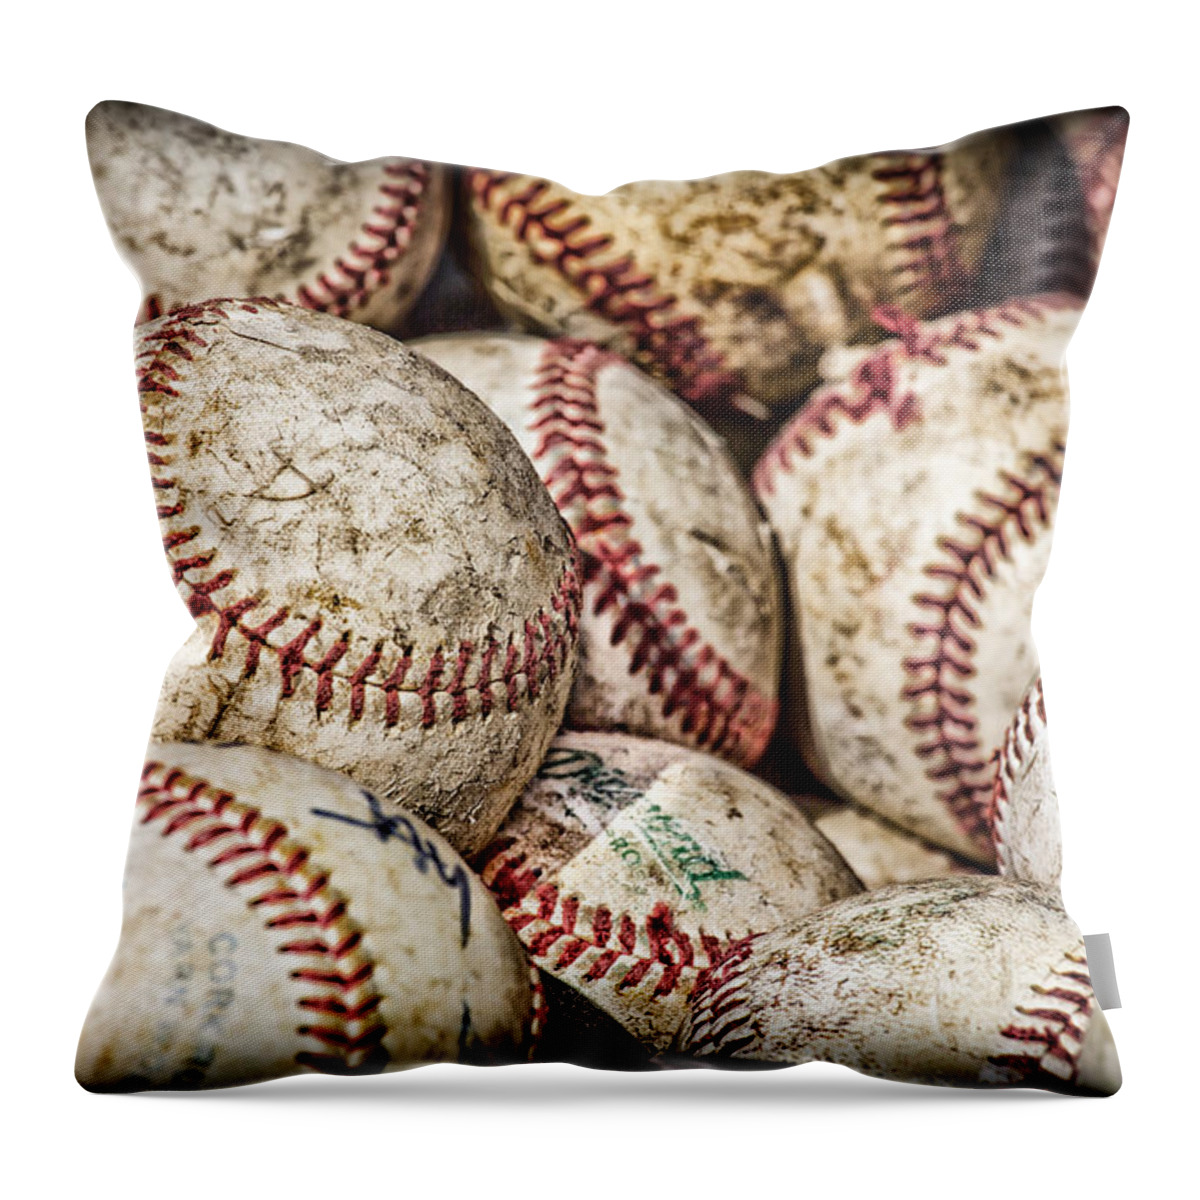 Baseballs Throw Pillow featuring the photograph Fair Balls by Caitlyn Grasso